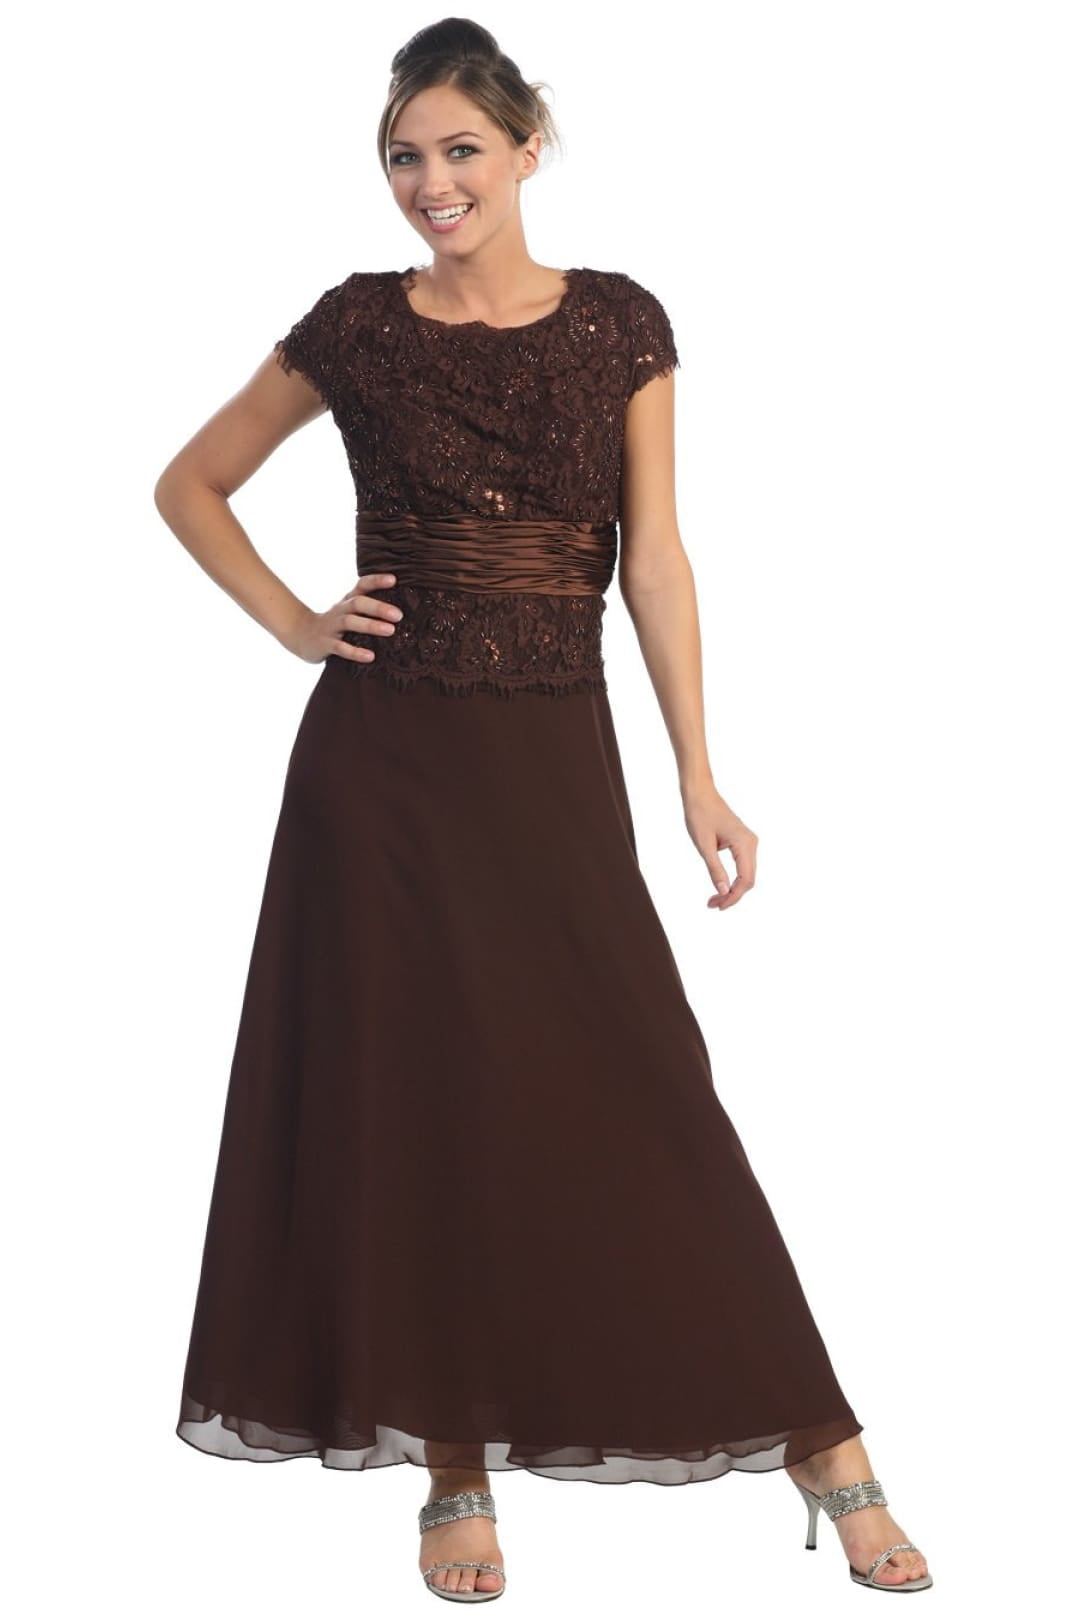 Long Irregular Dress Casual Sleeve Solid V-Neck Loose Short Dress